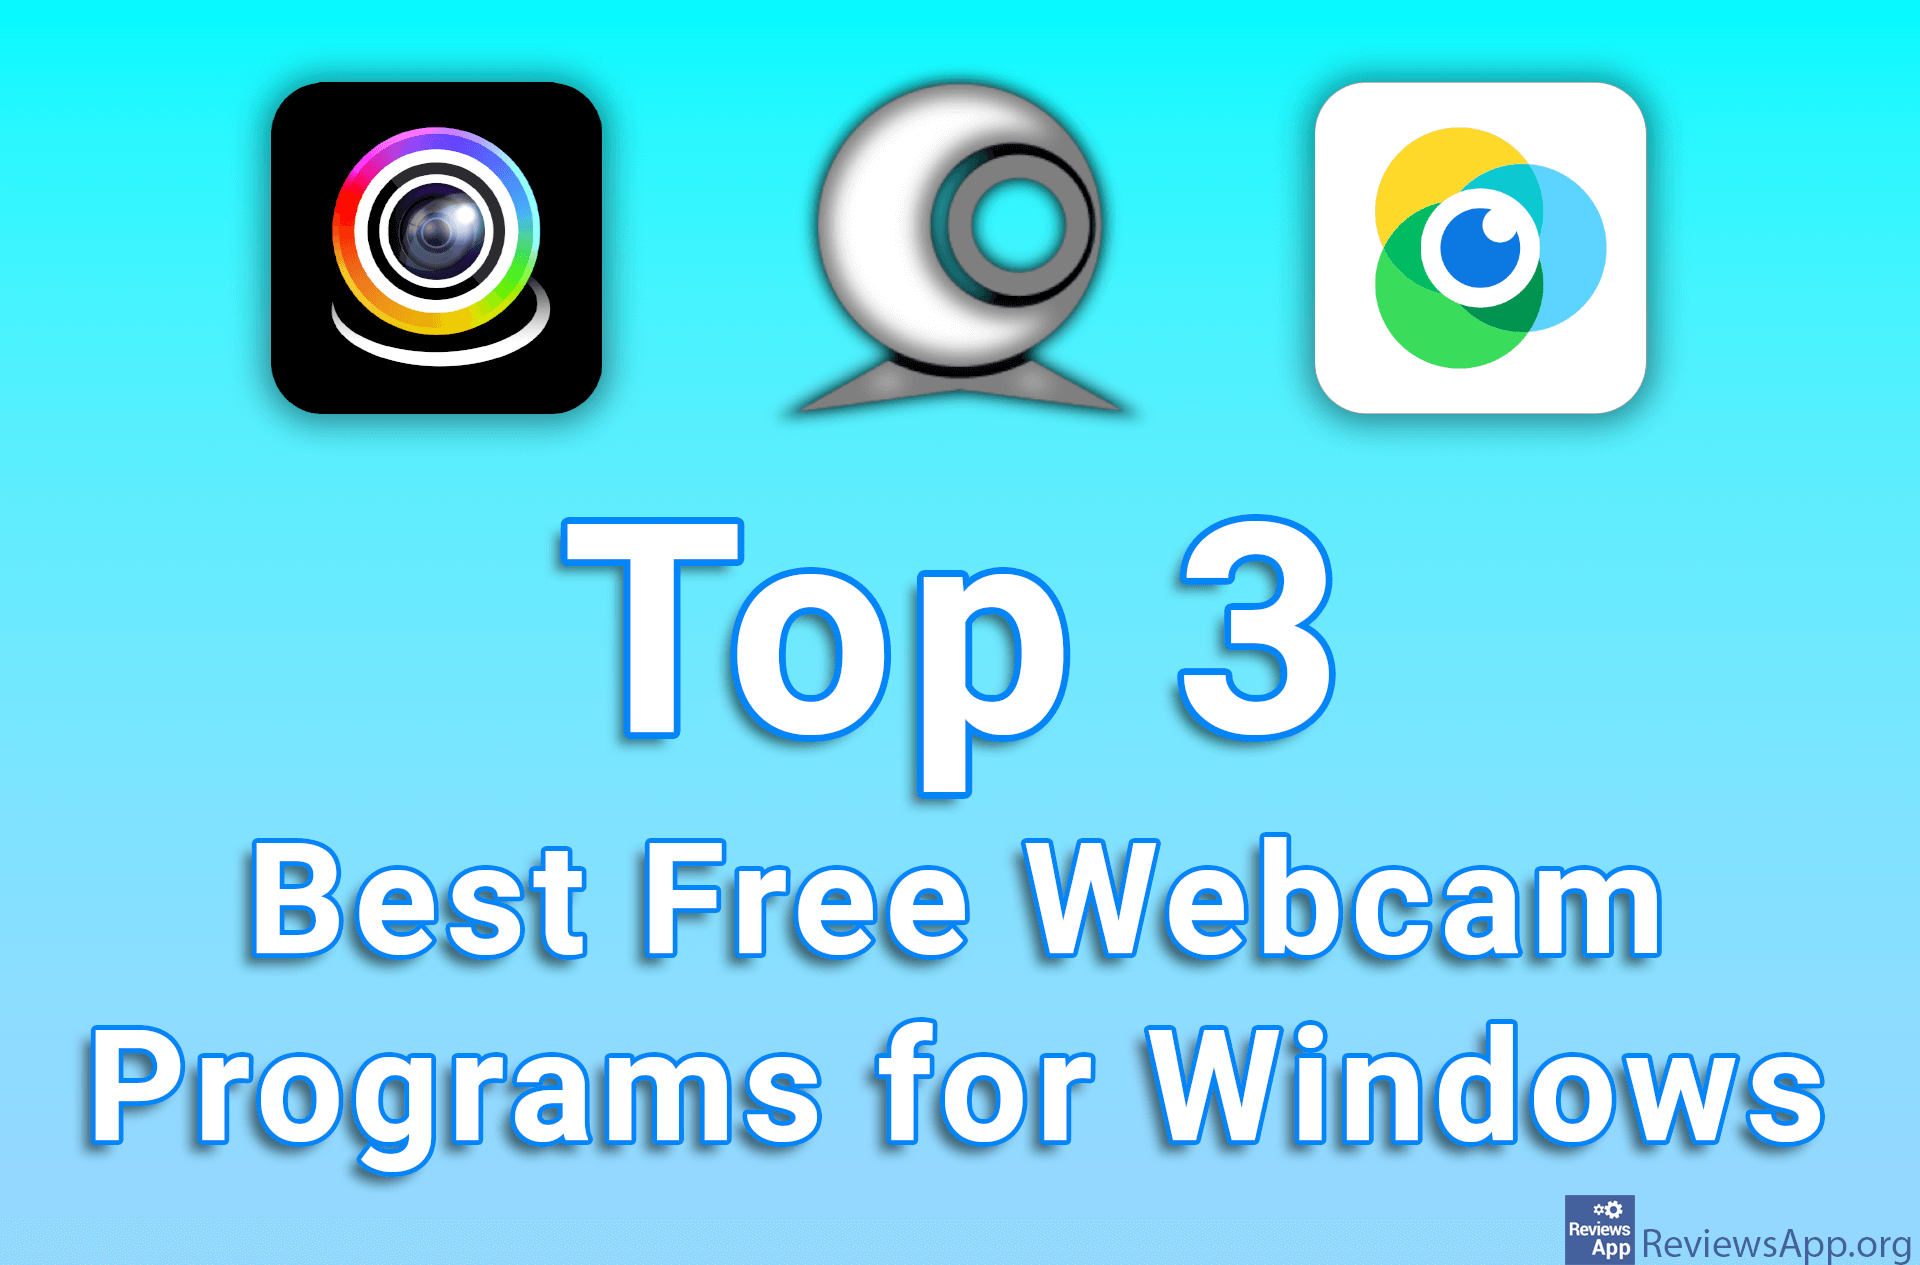 Top 3 Best Free Webcam Programs for Windows